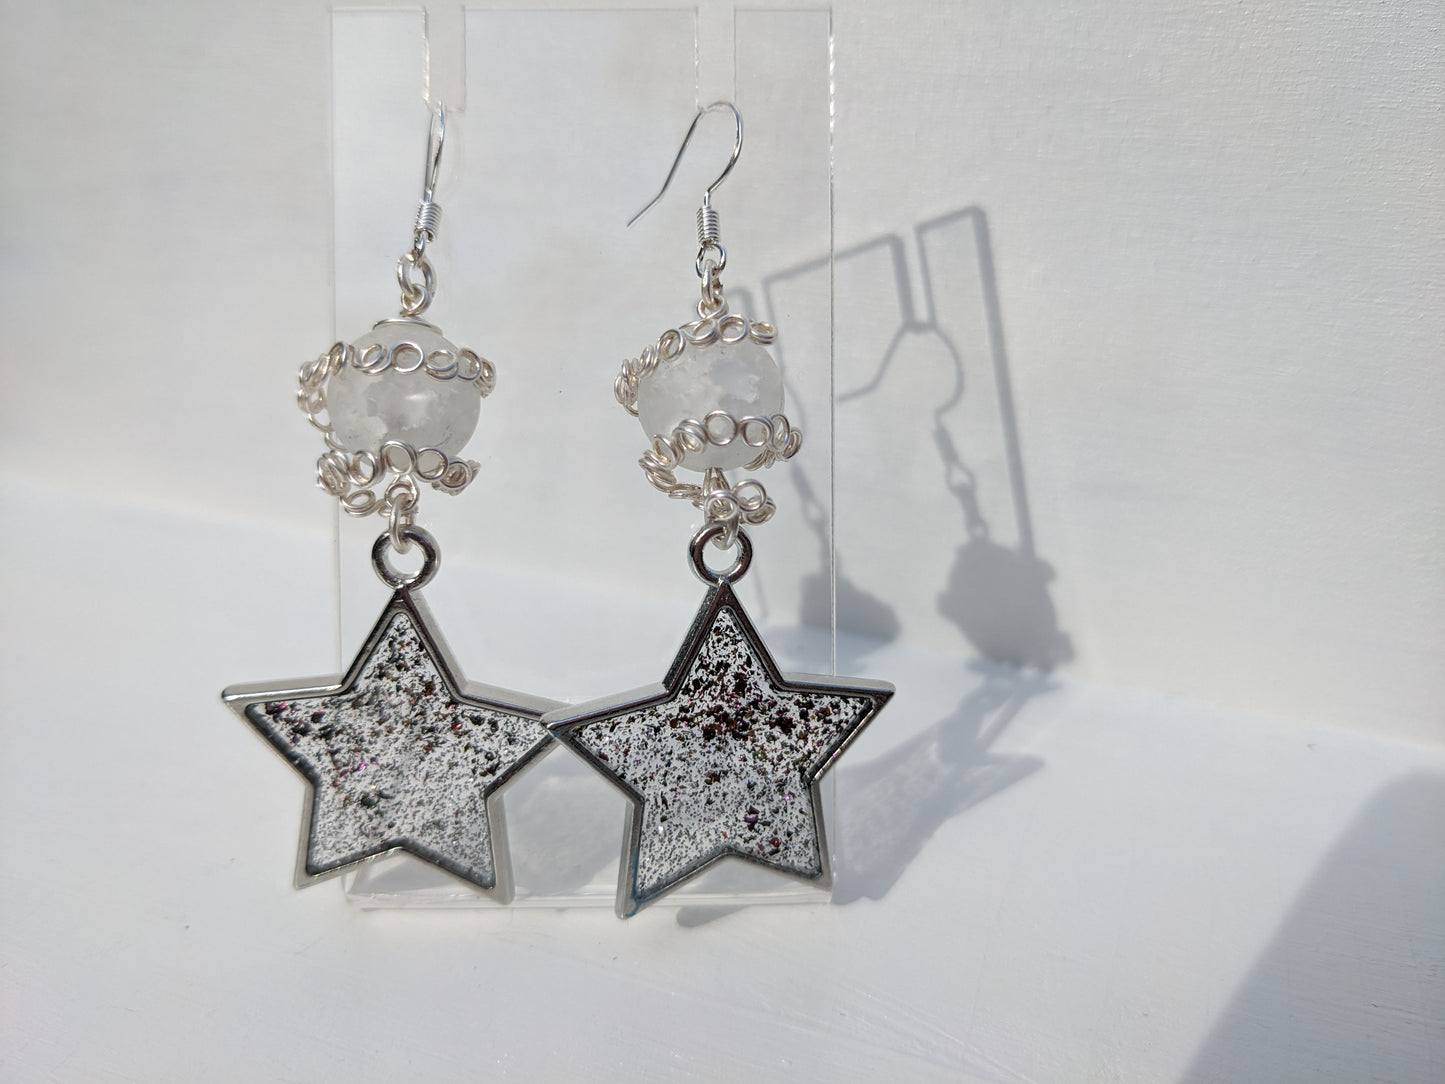 Crackle Quartz Crystals Silver Star Earrings